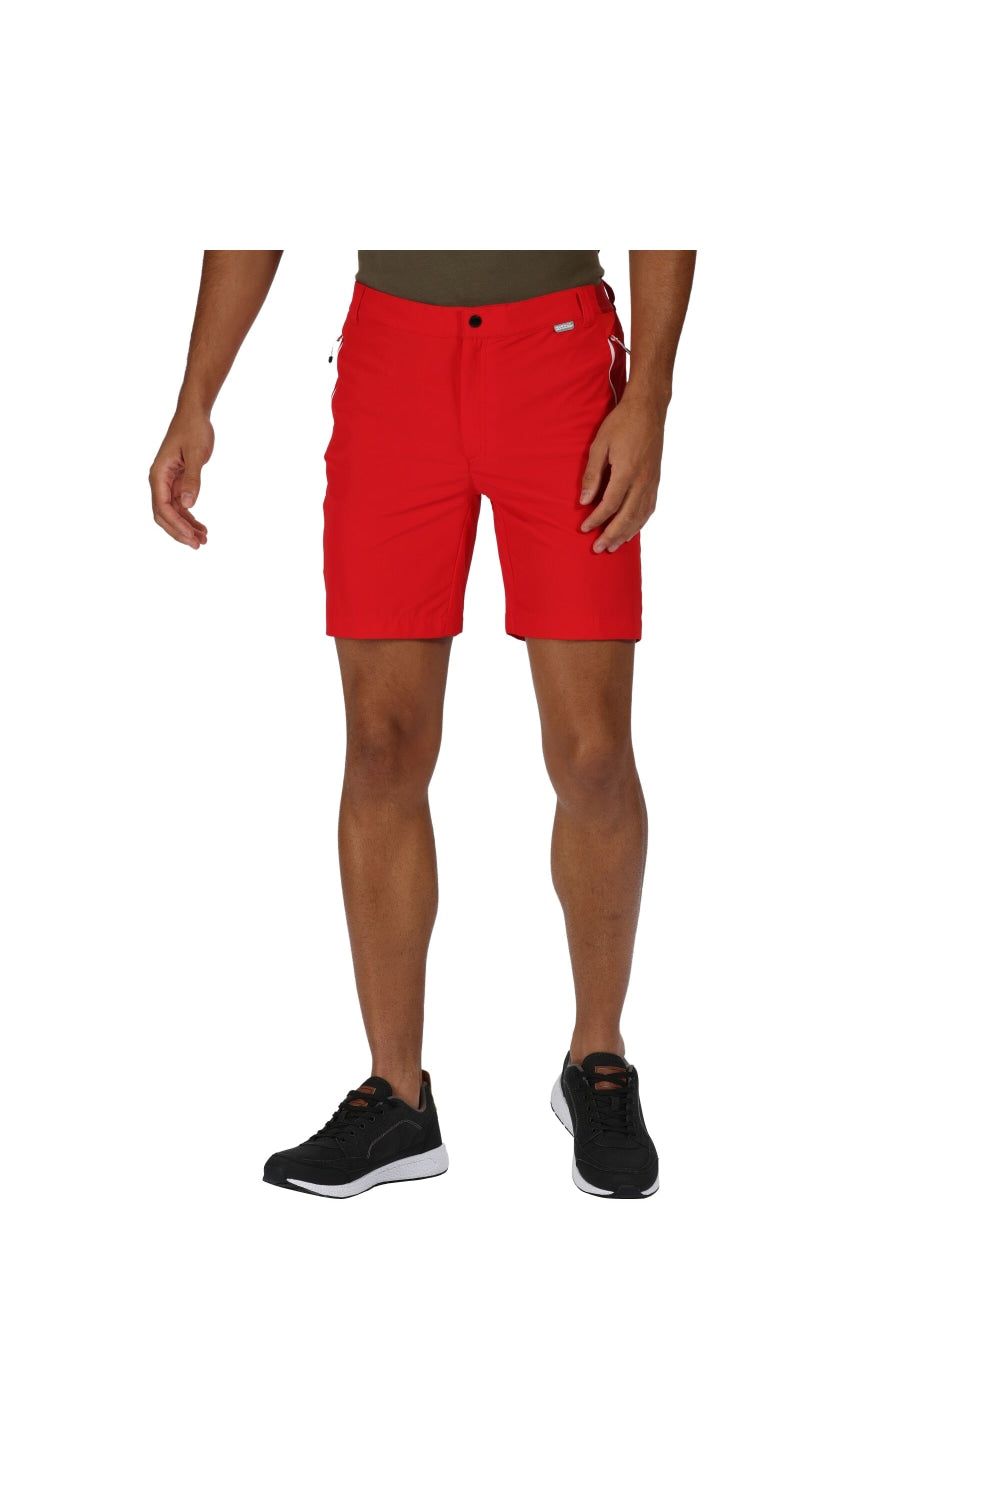 Mens Walking Shorts - Chinese Red